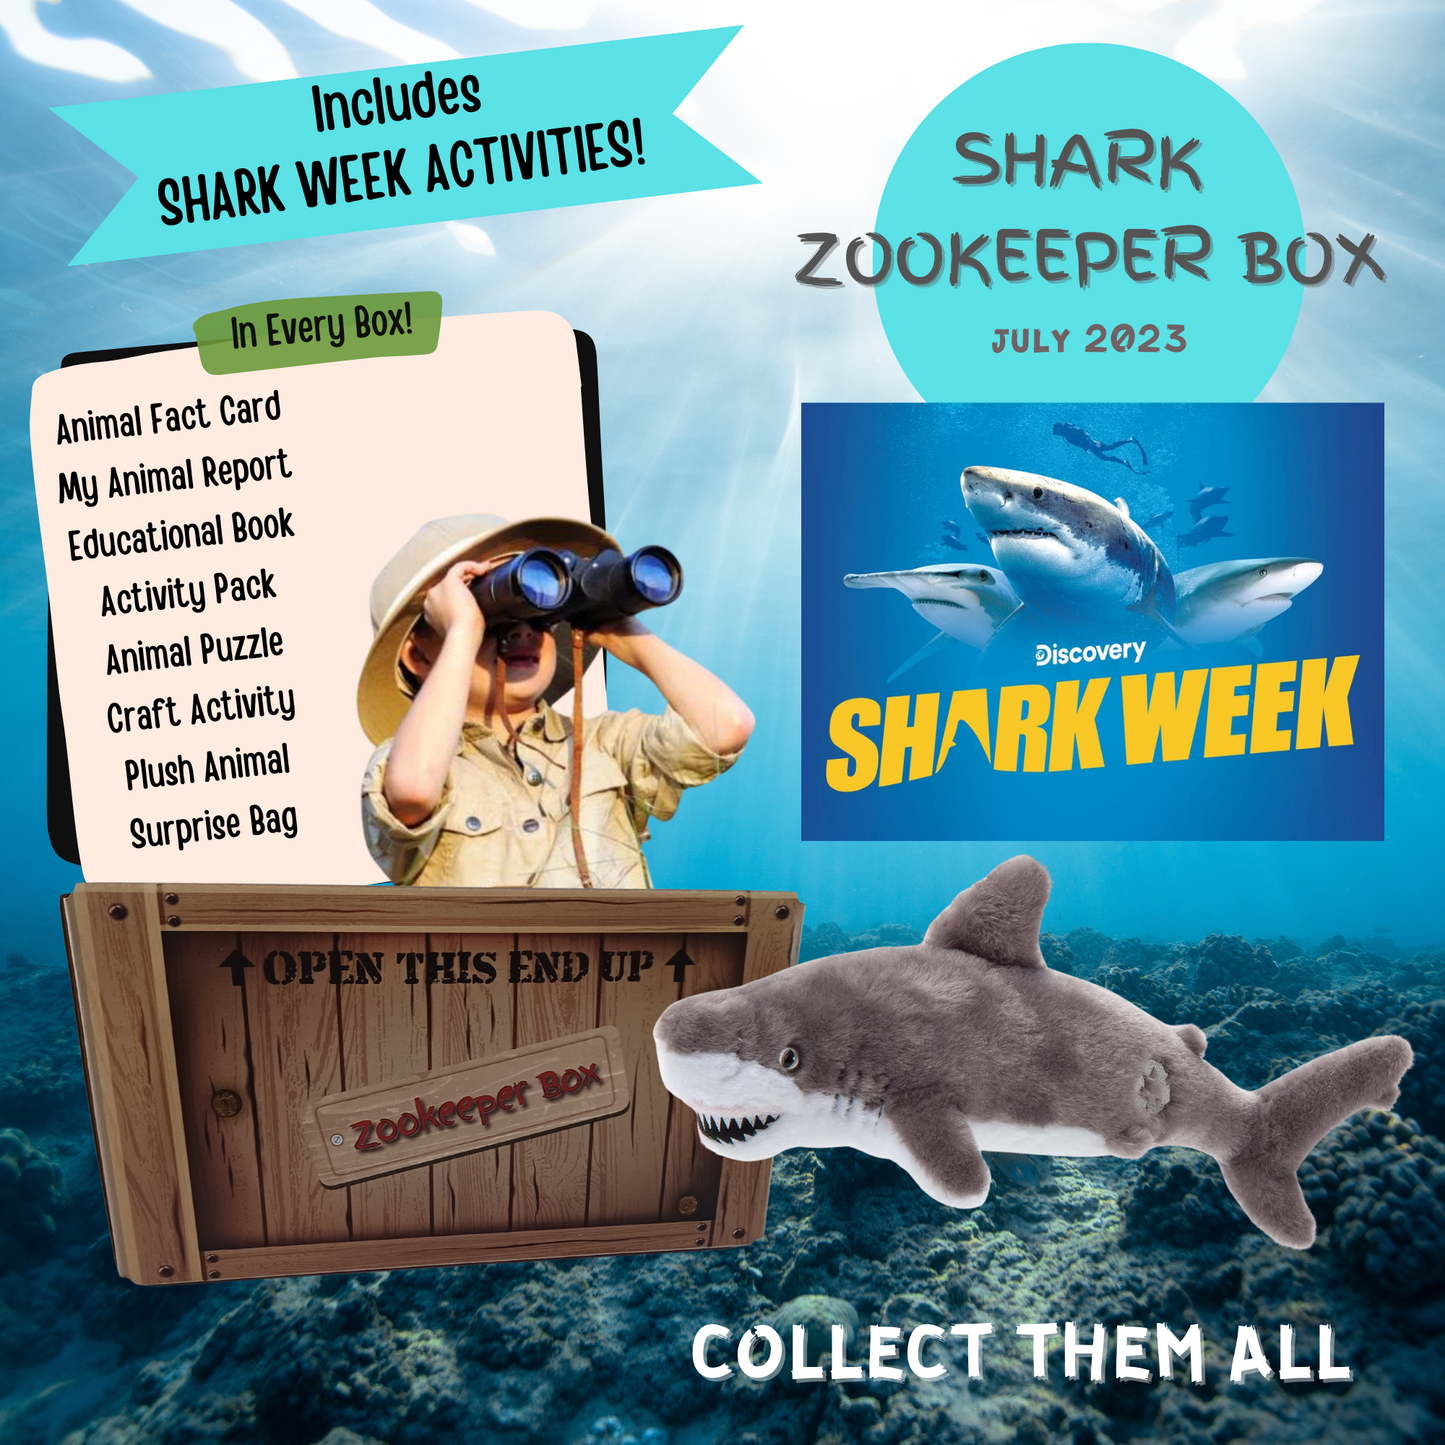 Shark Zookeeper Box